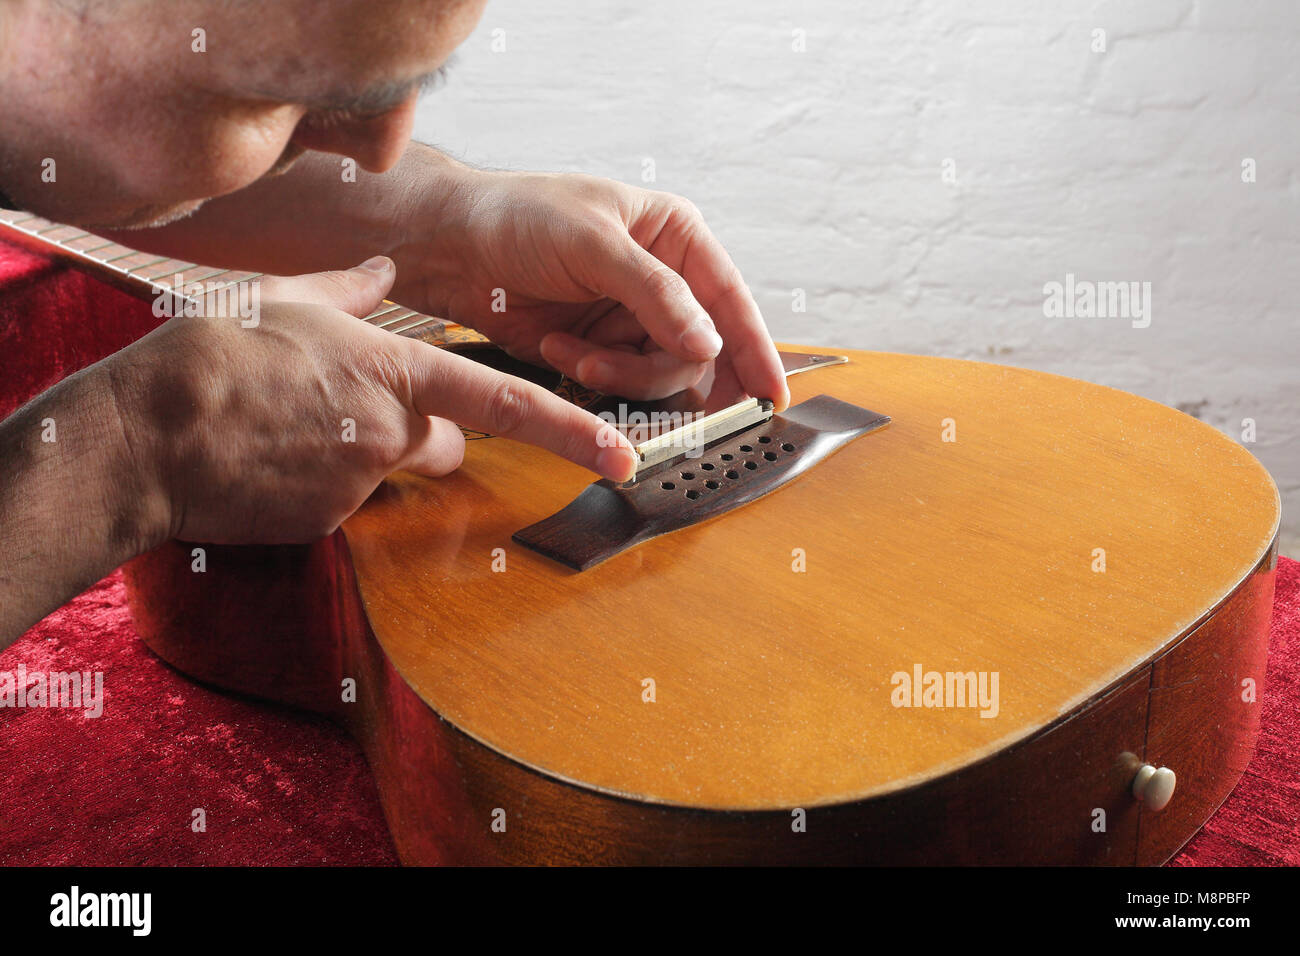 Musical instrument guitar repair and service - Grinding bridge nut. Stock Photo